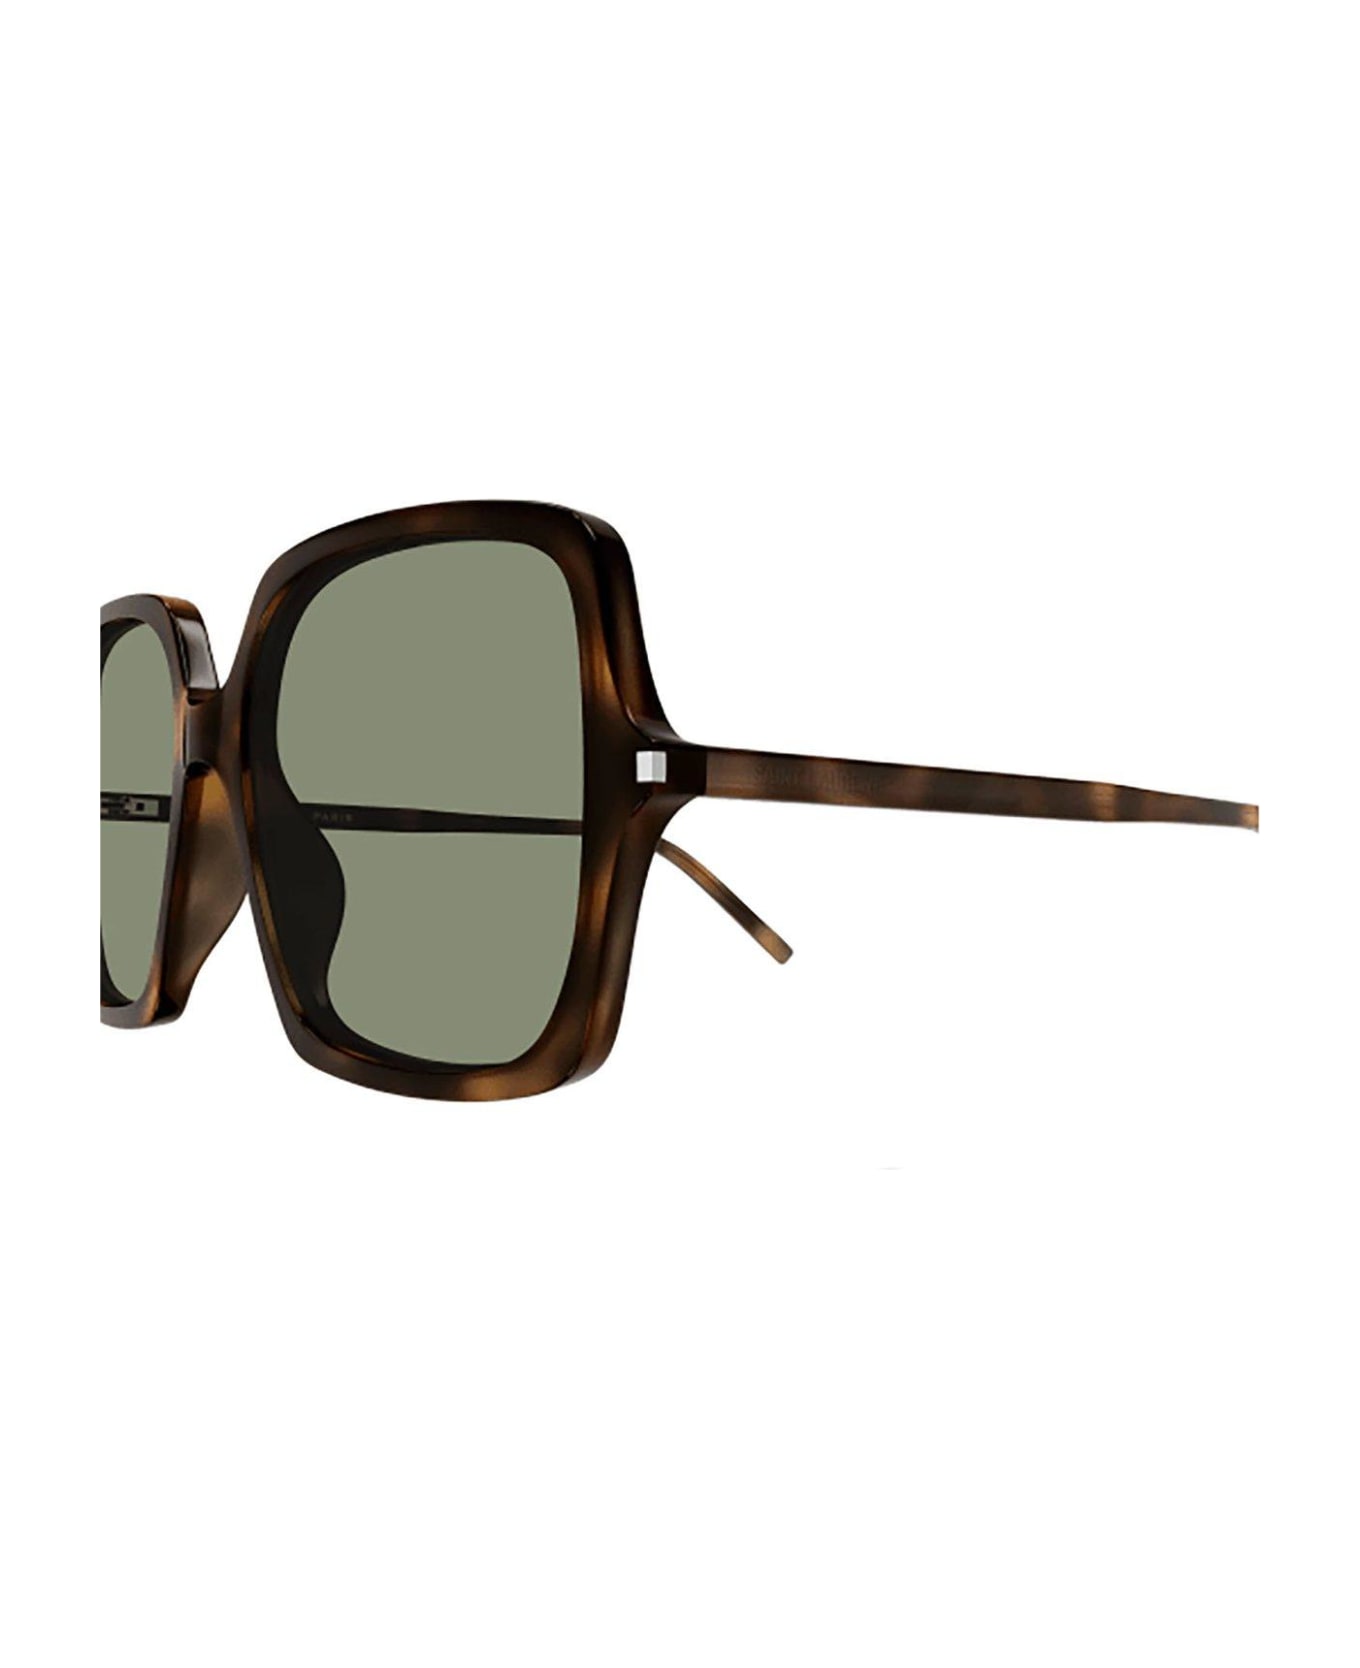 Saint Laurent Eyewear Square Frame Sunglasses - 002 havana havana green サングラス